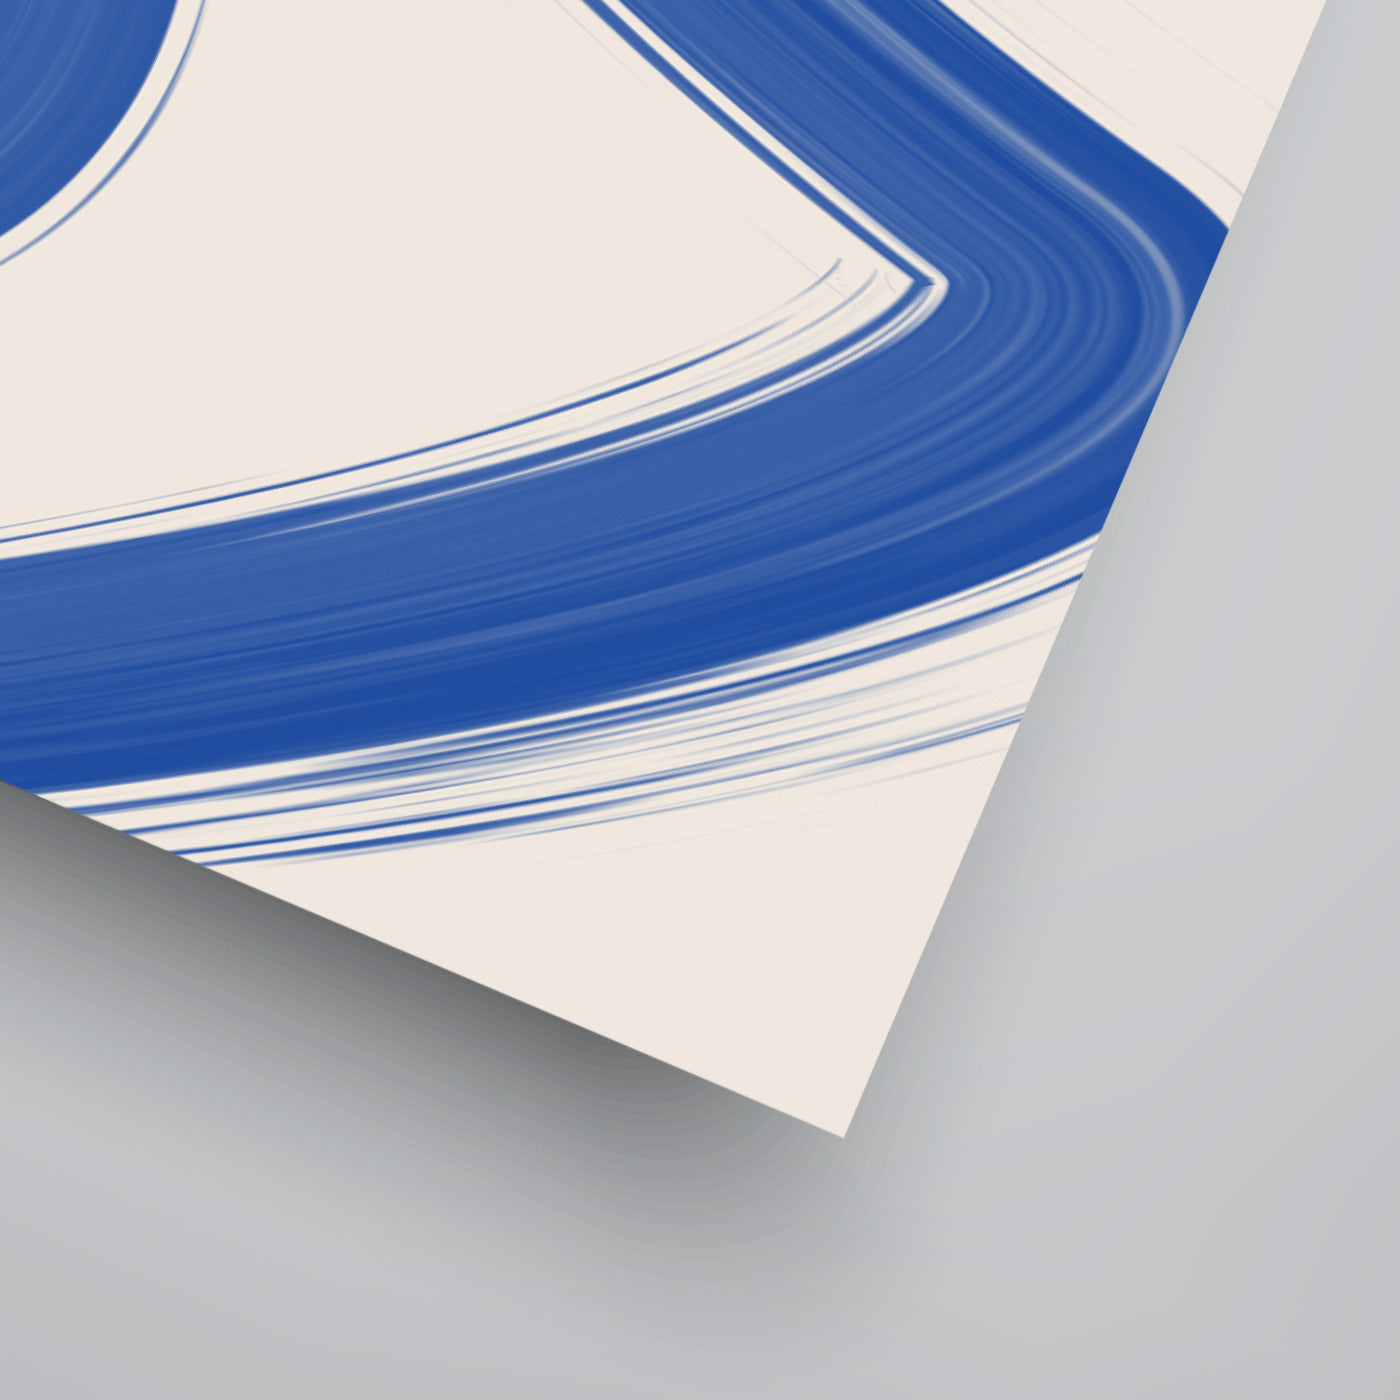 Cobalt Blue Beige Continuous Line Drawing 1 by The Print Republic - Prints